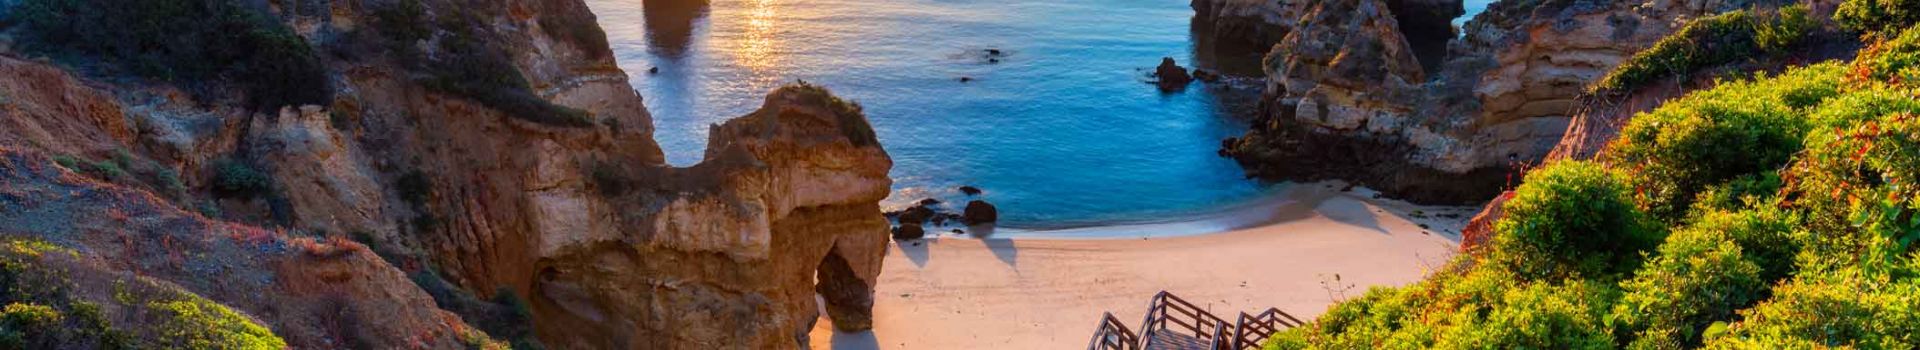 Summer Family Holidays to Algarve | Book Flight & Hotel with Cassidy Travel | Ireland’s #1 Travel Agent